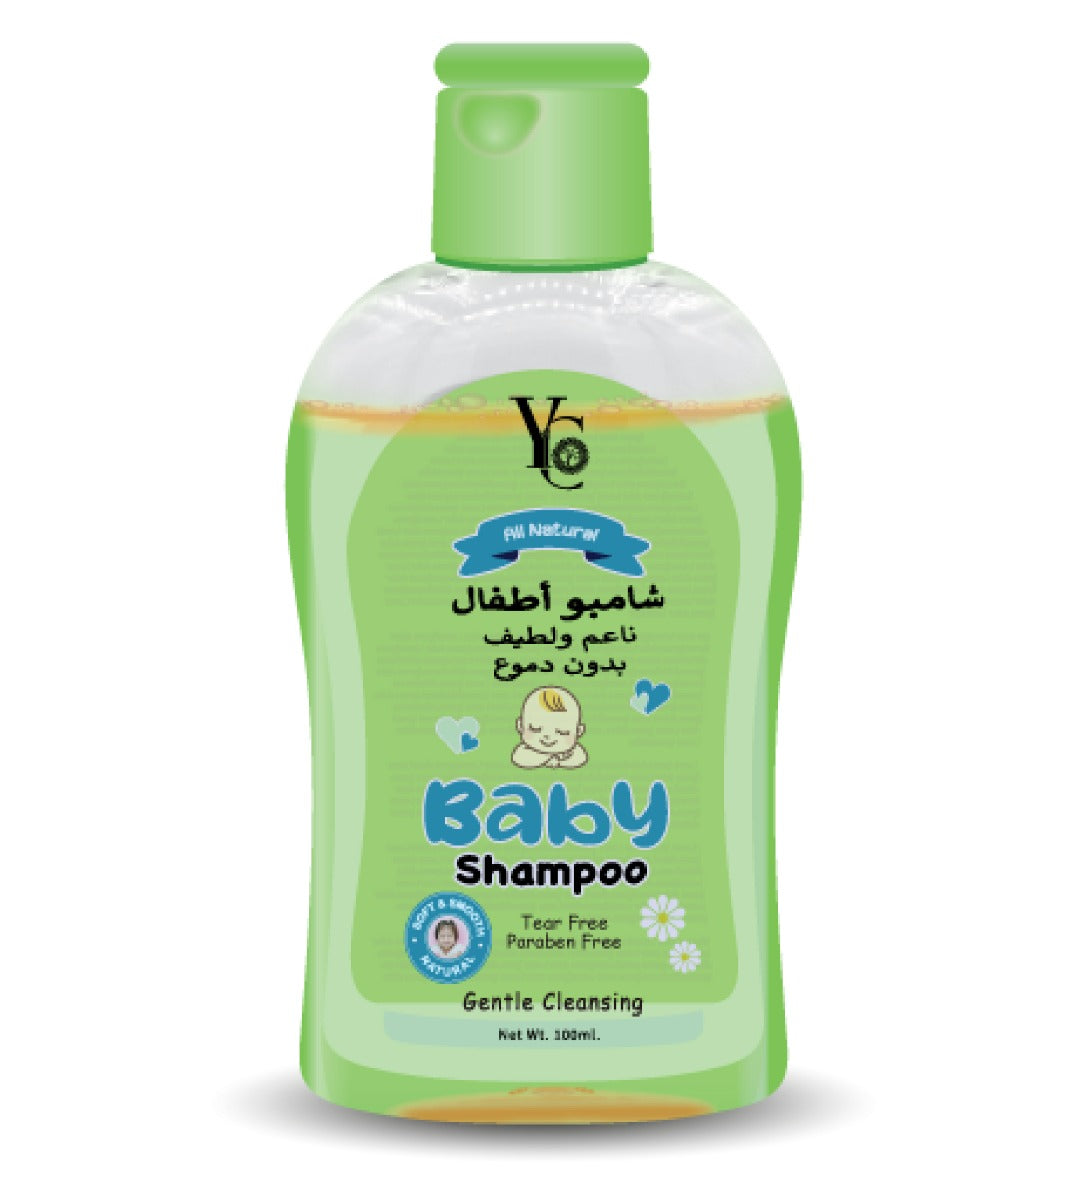 YC Baby Shampoo (100ml)